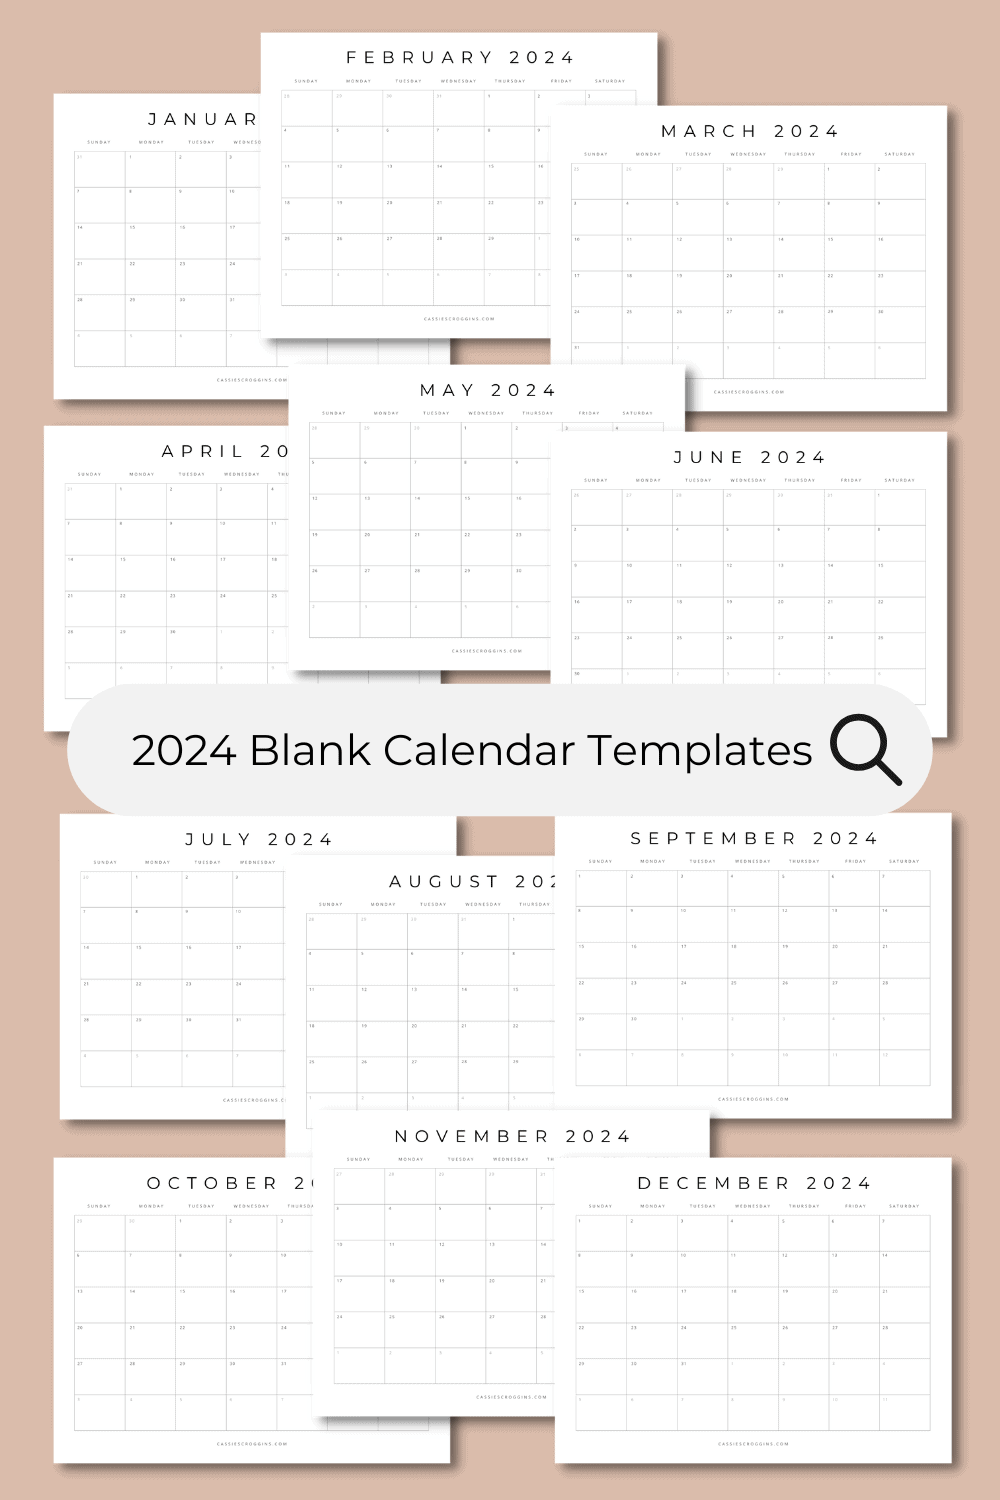 Free Printable 2024 Blank Calendar Templates (All 12 Months) intended for Free Printable Blank 2024 Calendar